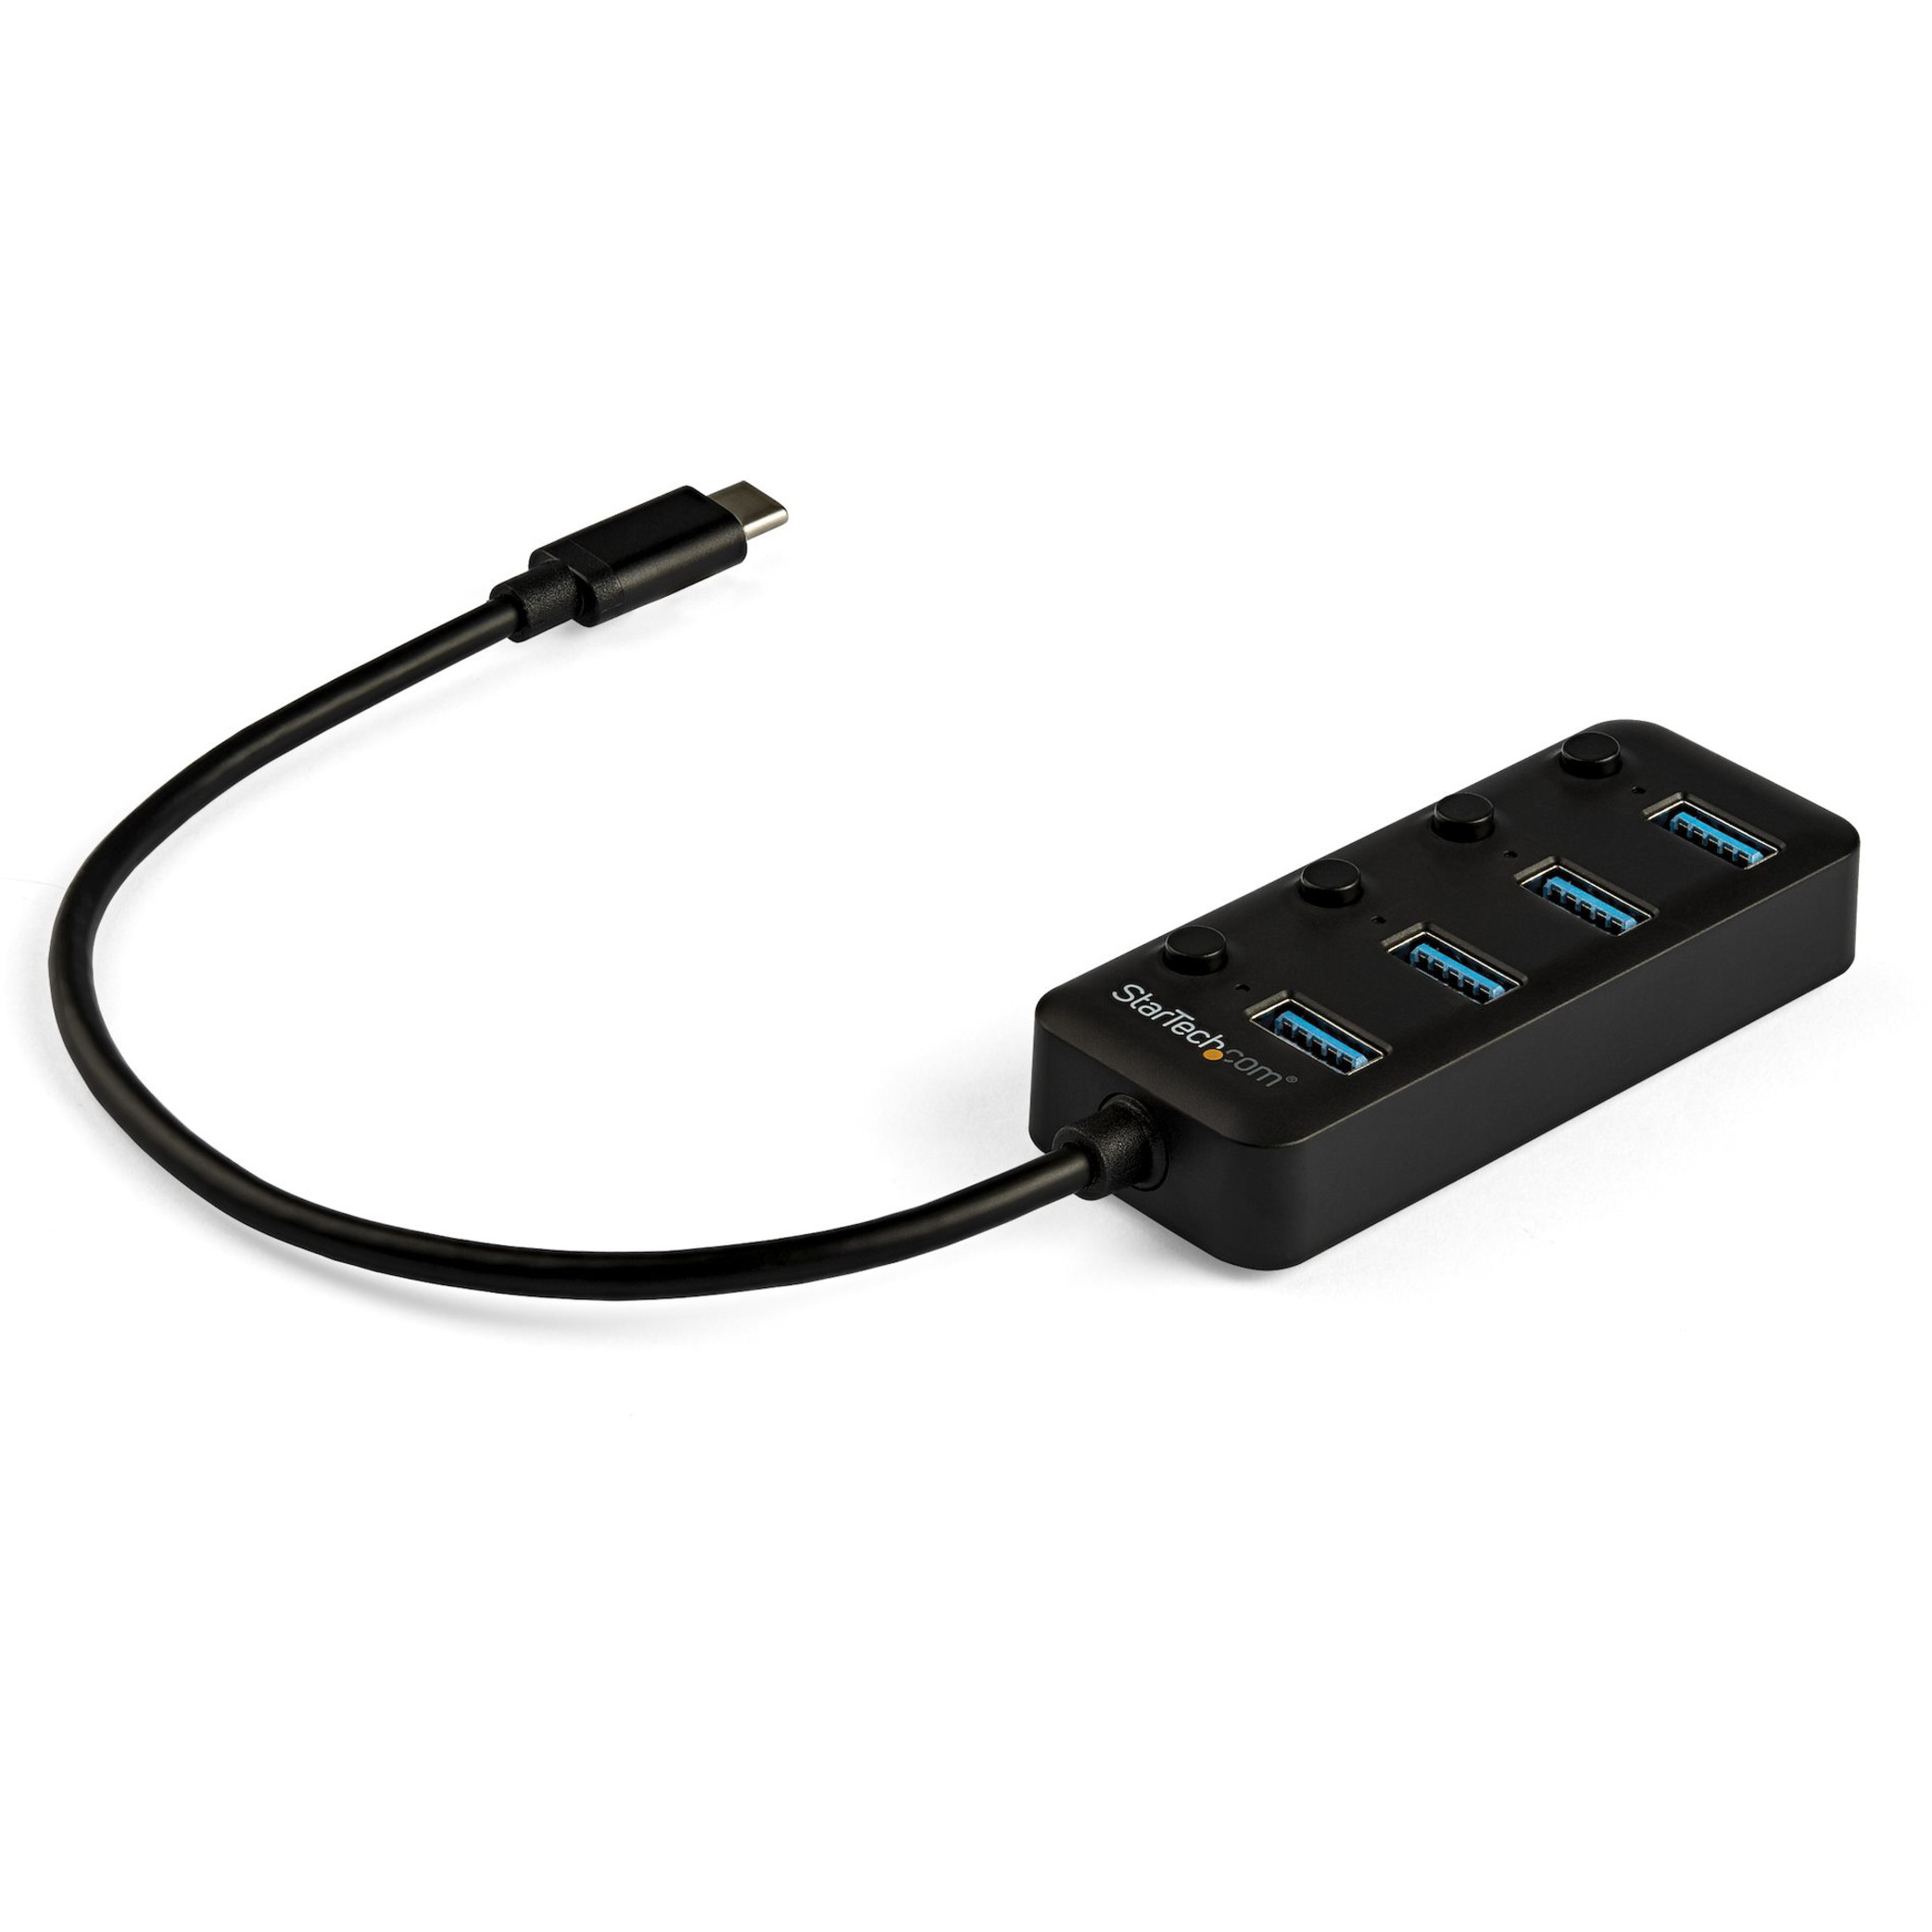 Startech .com 4 Port USB C Hub4x USB 3.0 Type-A with Individual On/Off Port SwitchesSuperSpeed 5Gbps USB 3.1/3.2 Gen 1Bus PoweredBu… HB30C4AIB